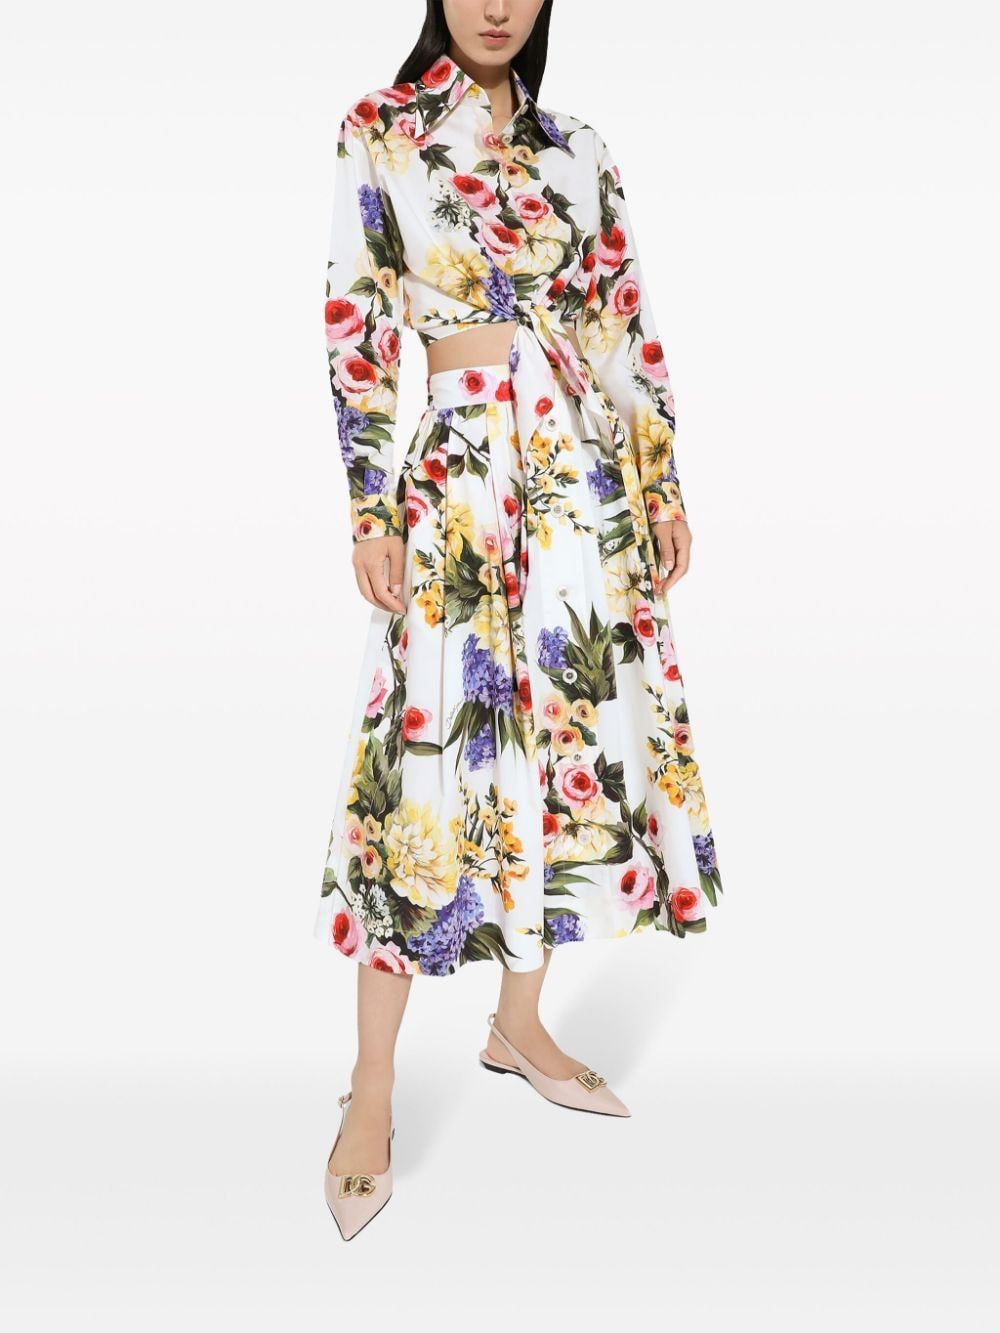 DOLCE & GABBANA Multicolor Garden-Print Cotton Poplin Midi Circle Skirt for Women